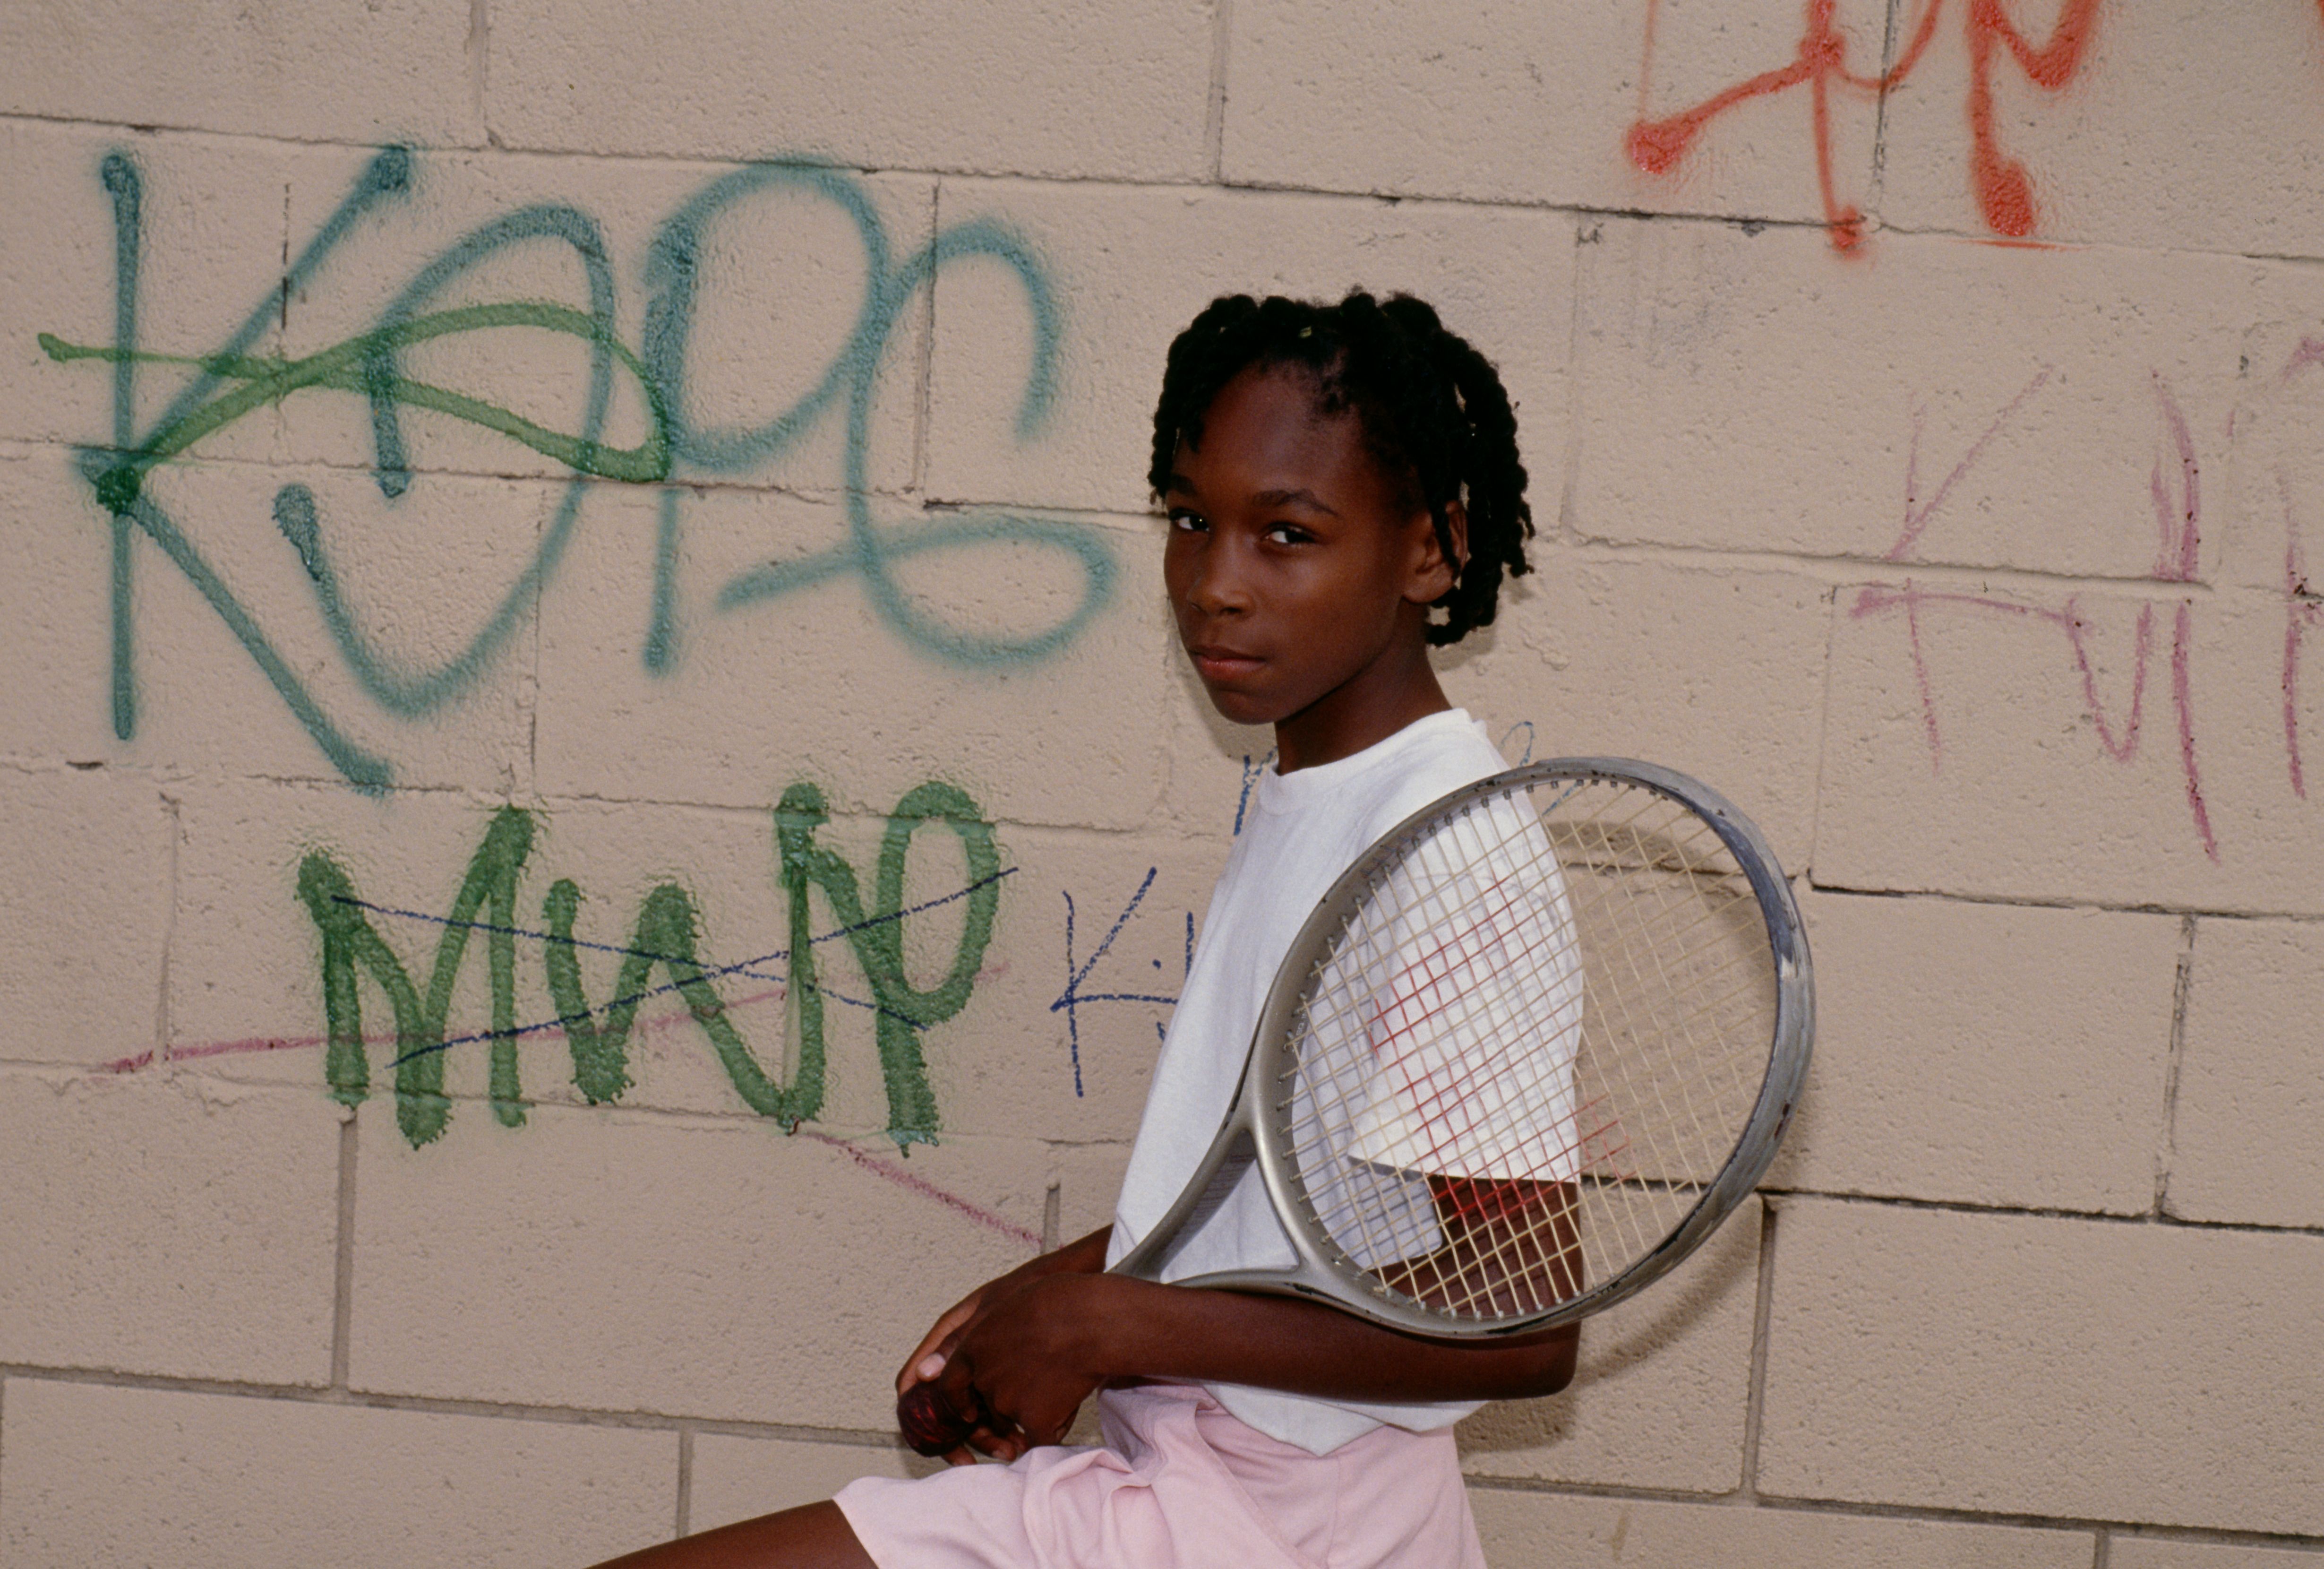 American tennis star Venus Williams